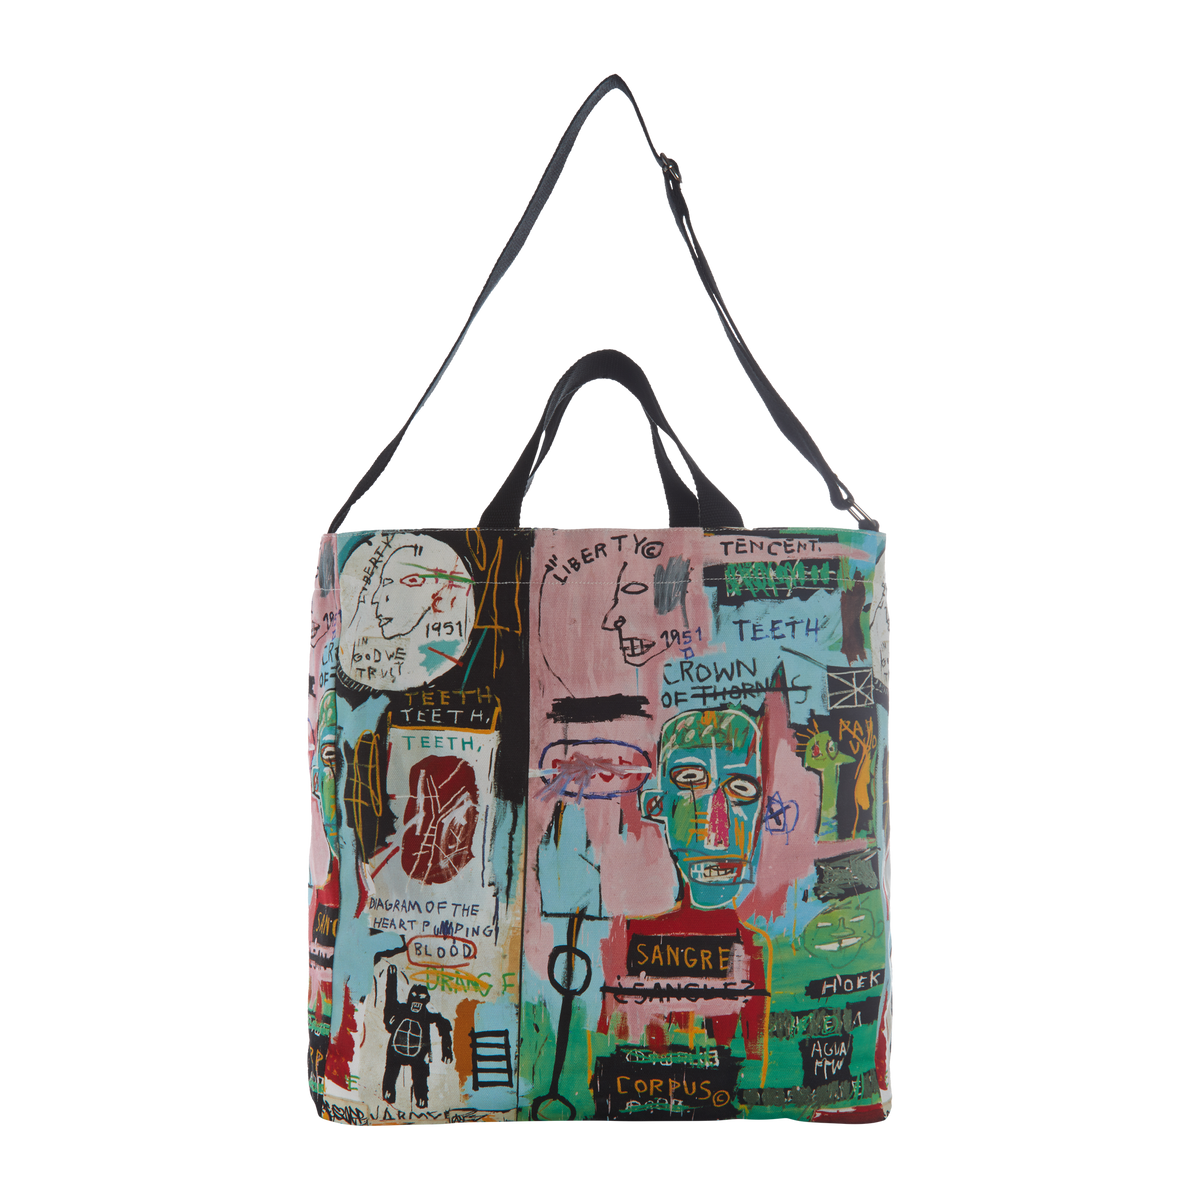 Jean-Michel Basquiat "In Italian" Crossbody Bag